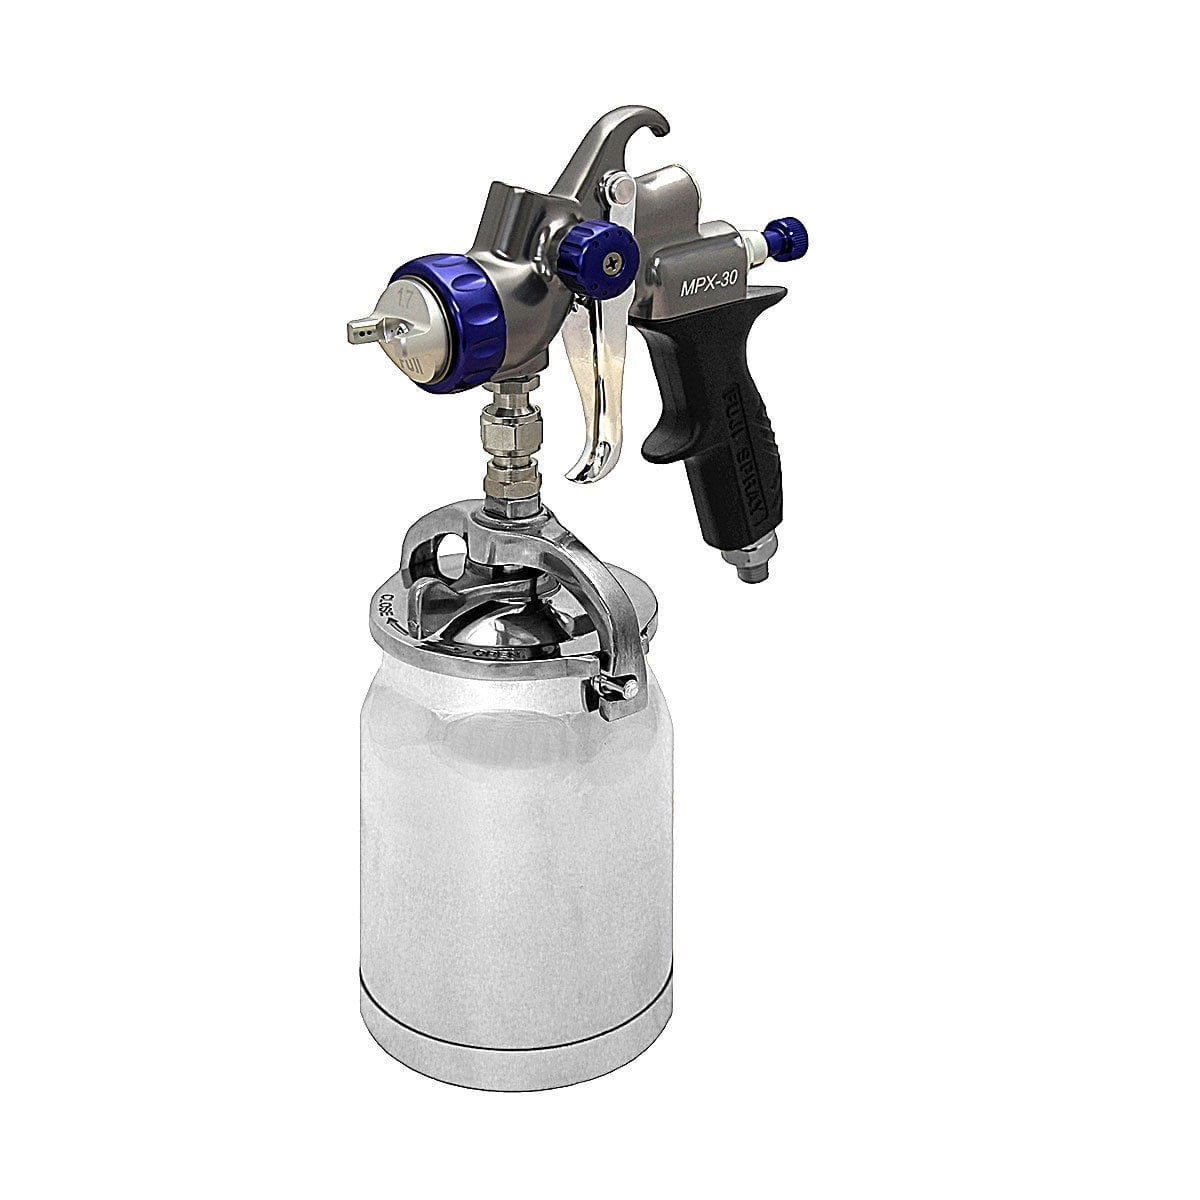 Fuji Spray 6350S-MP-C-17K Compressor Spray Guns & Accessories MPX-30 Siphon Feed Spray Gun with 1QT Cup